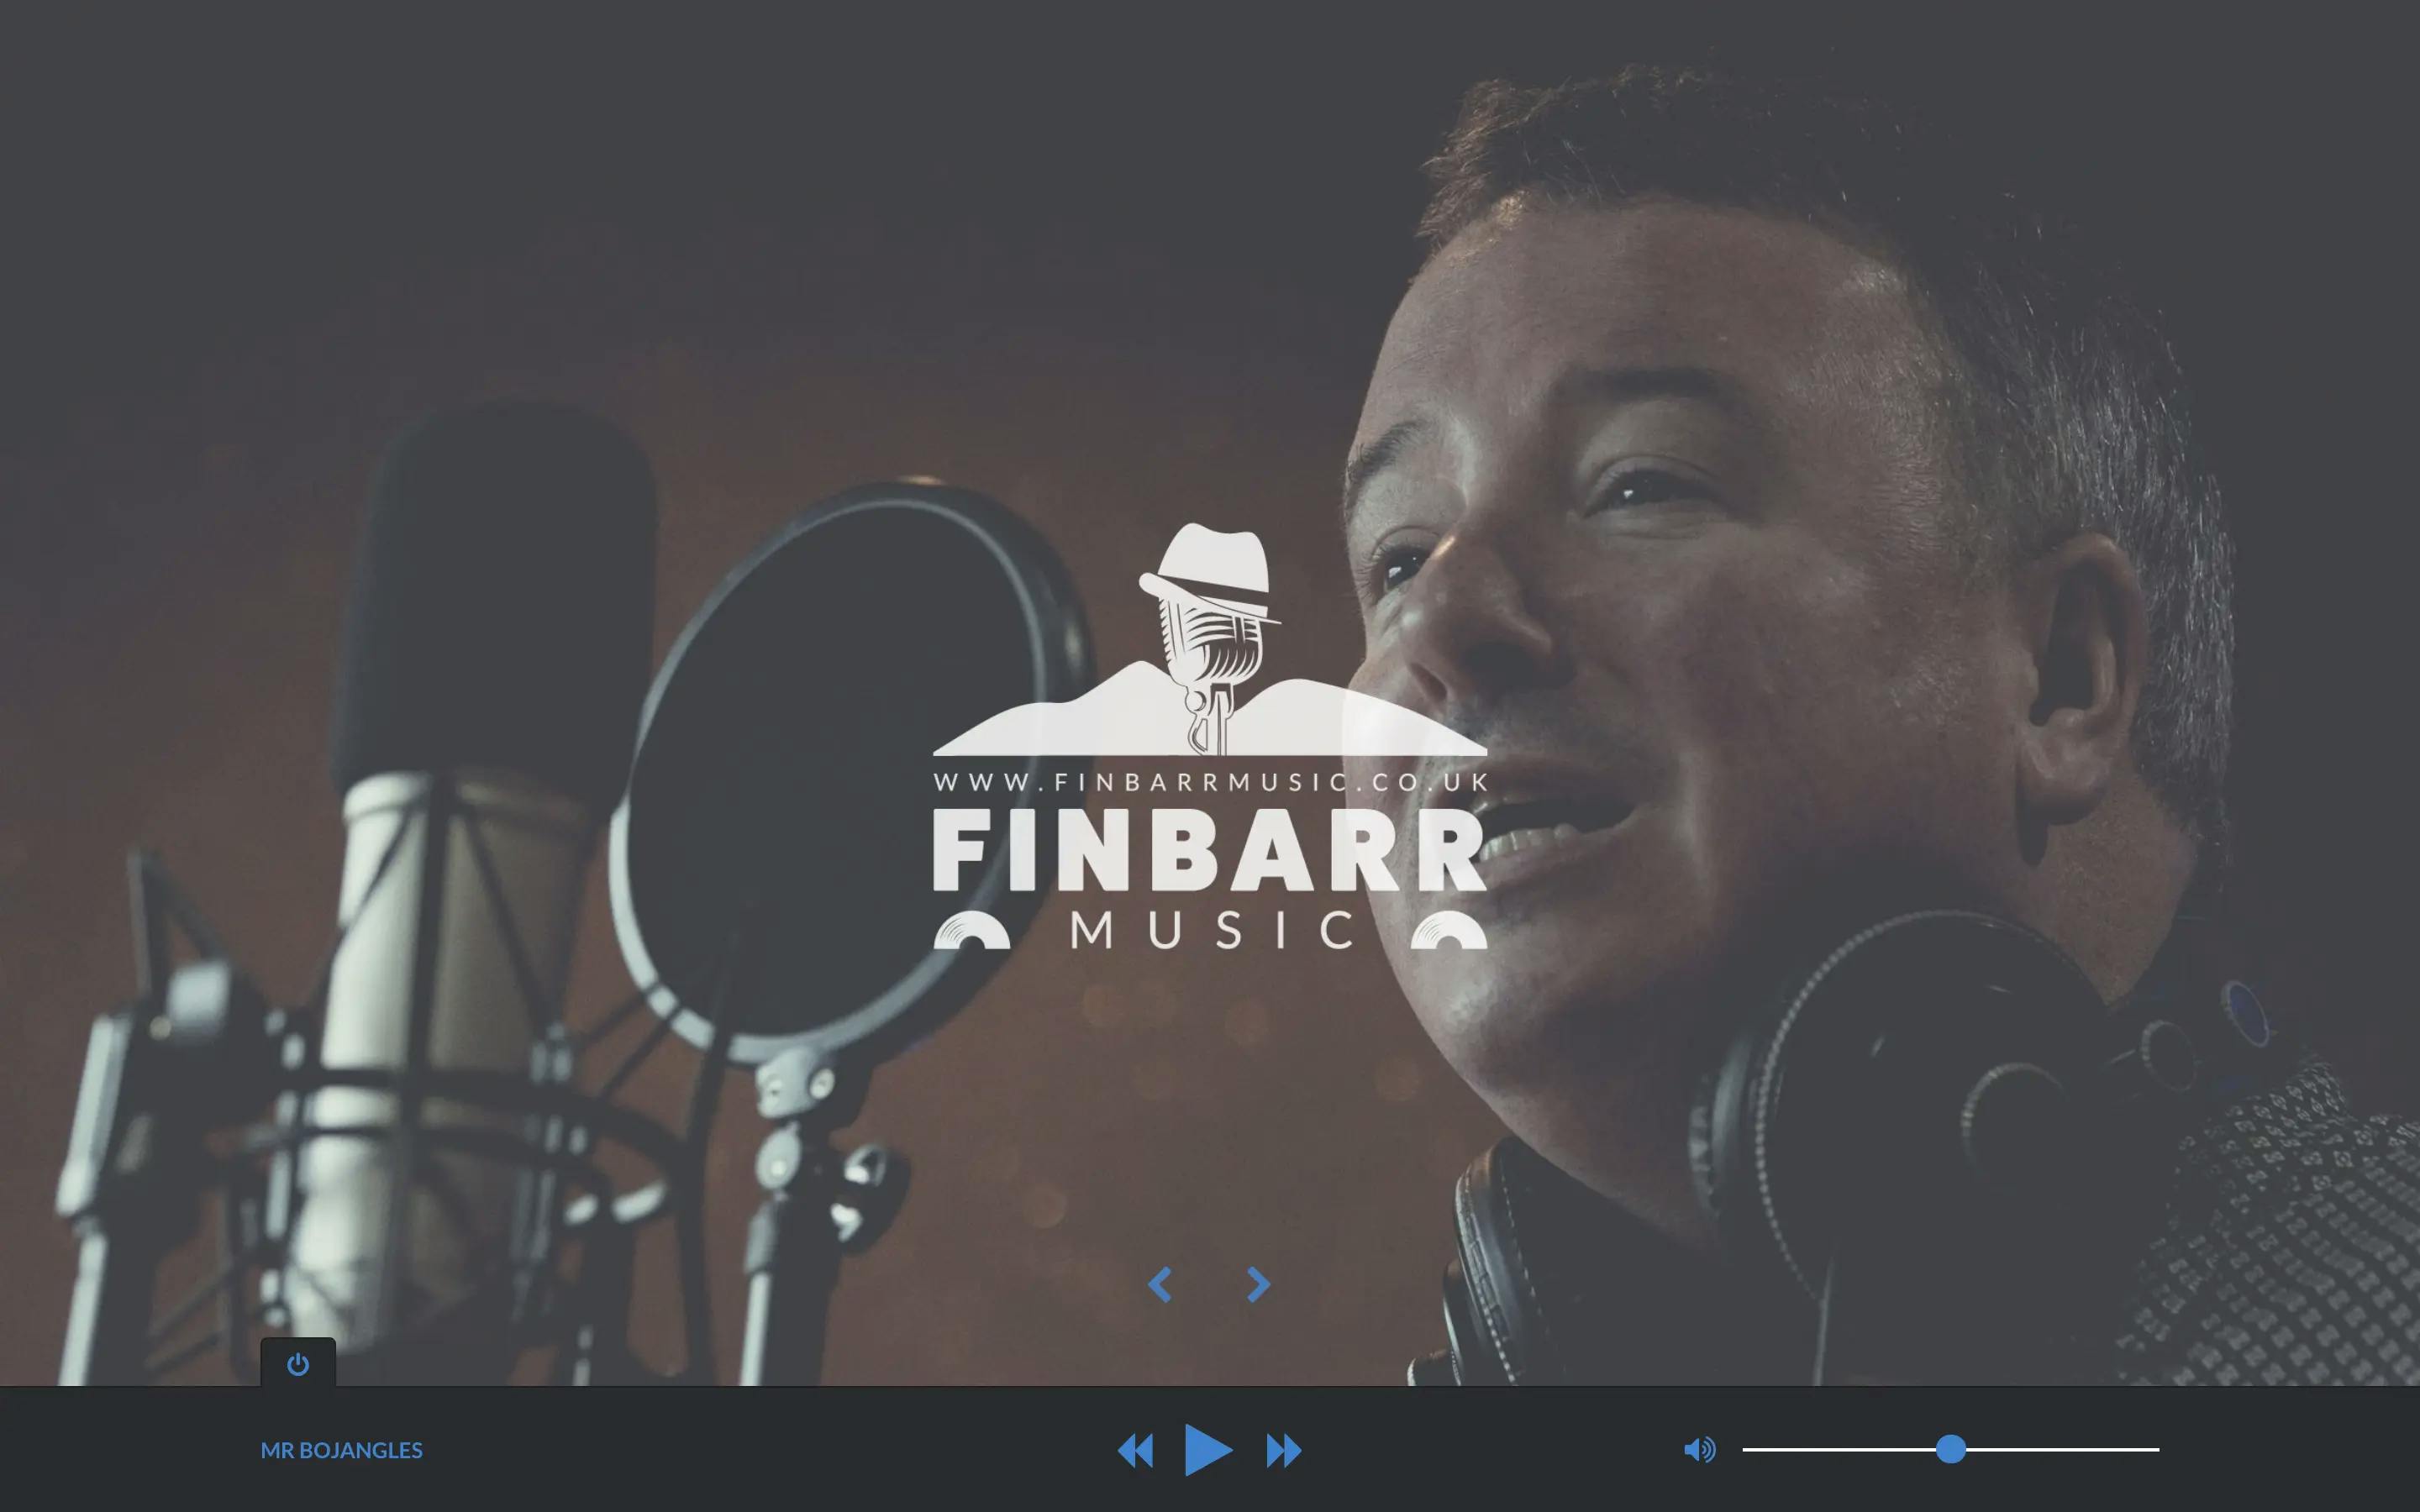 Finbarr Music website homepage screenshot